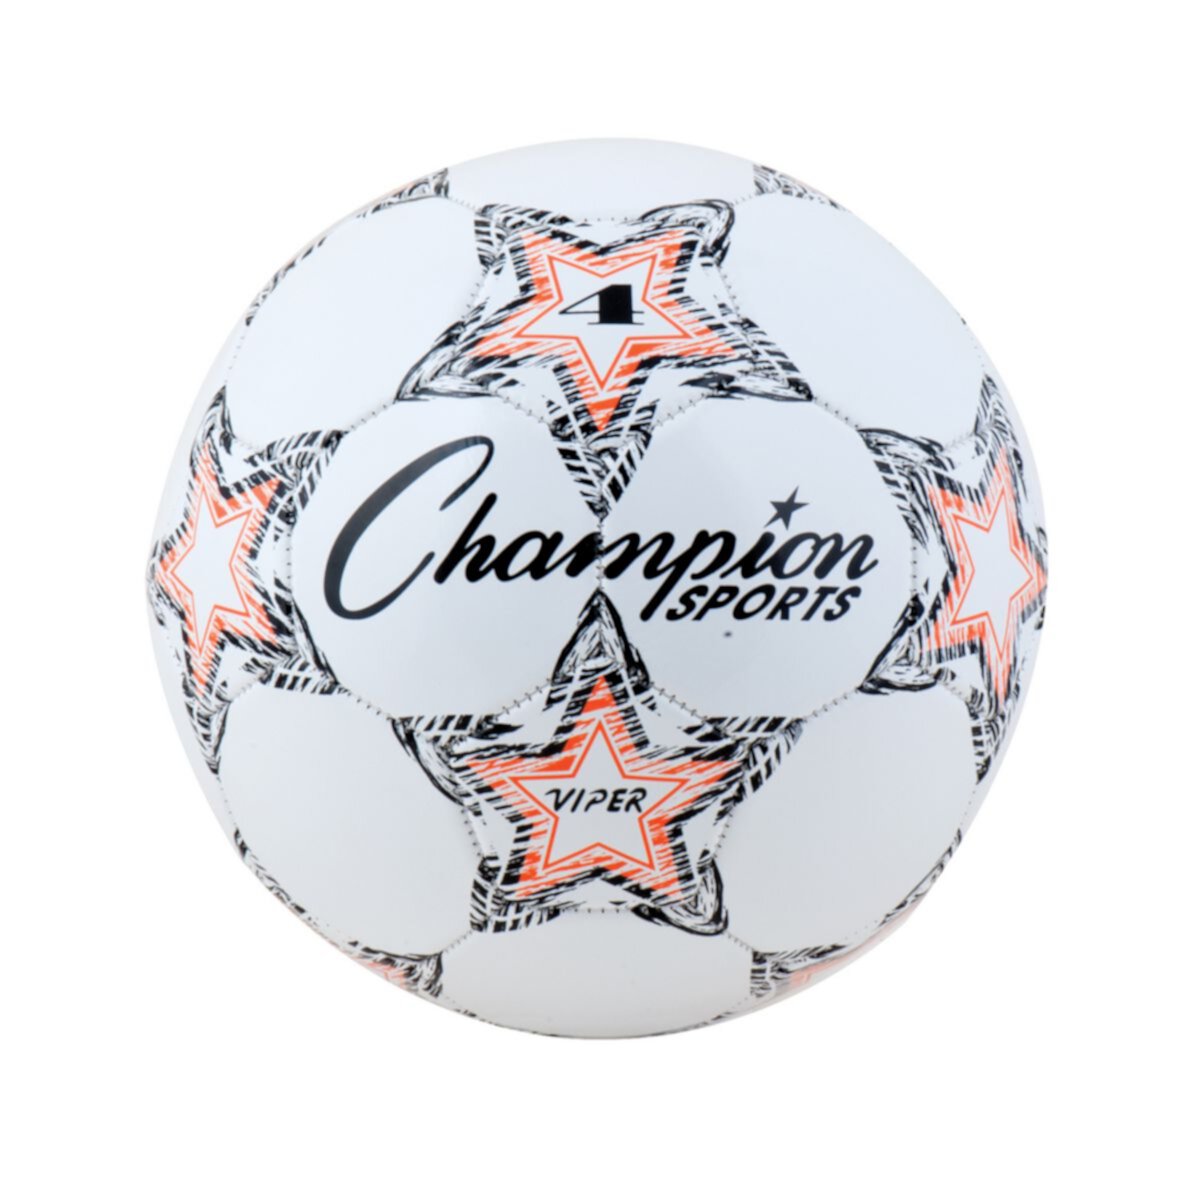 Футбольный мяч Viper размера 4 Champion Sports Champion Sports